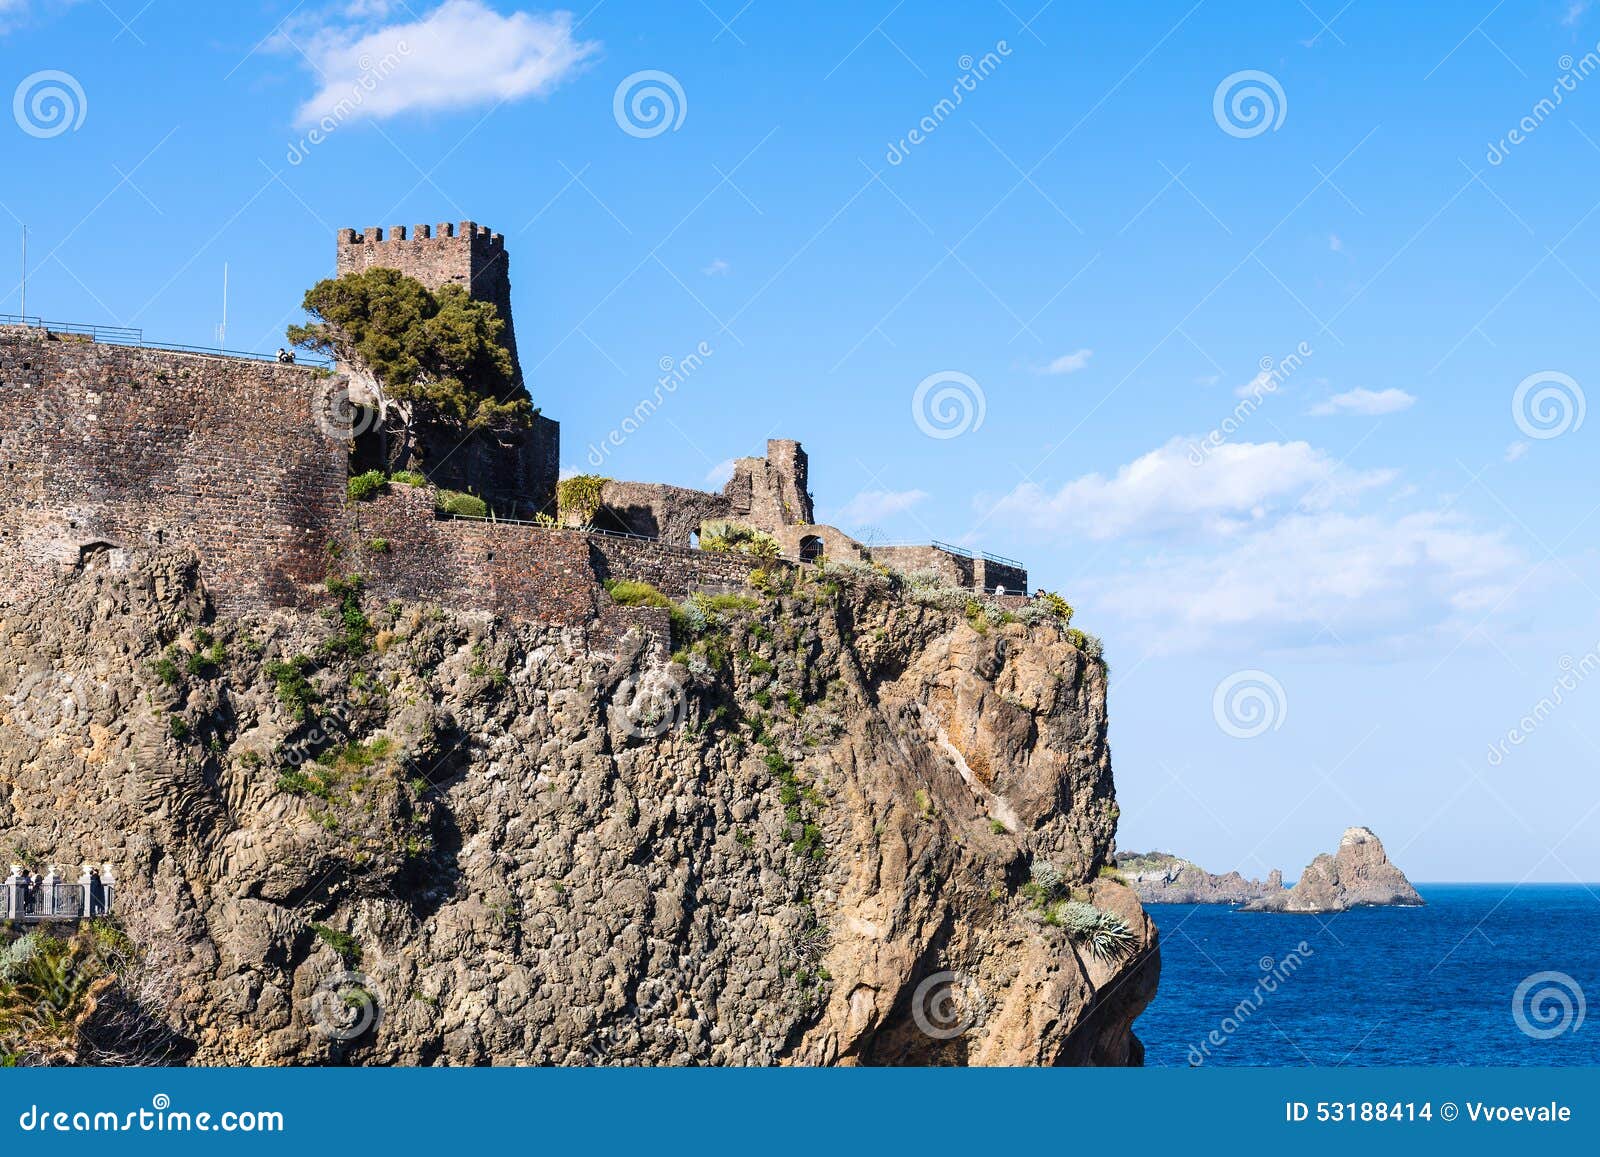 norman castle in aci castello and cyclopean rocks